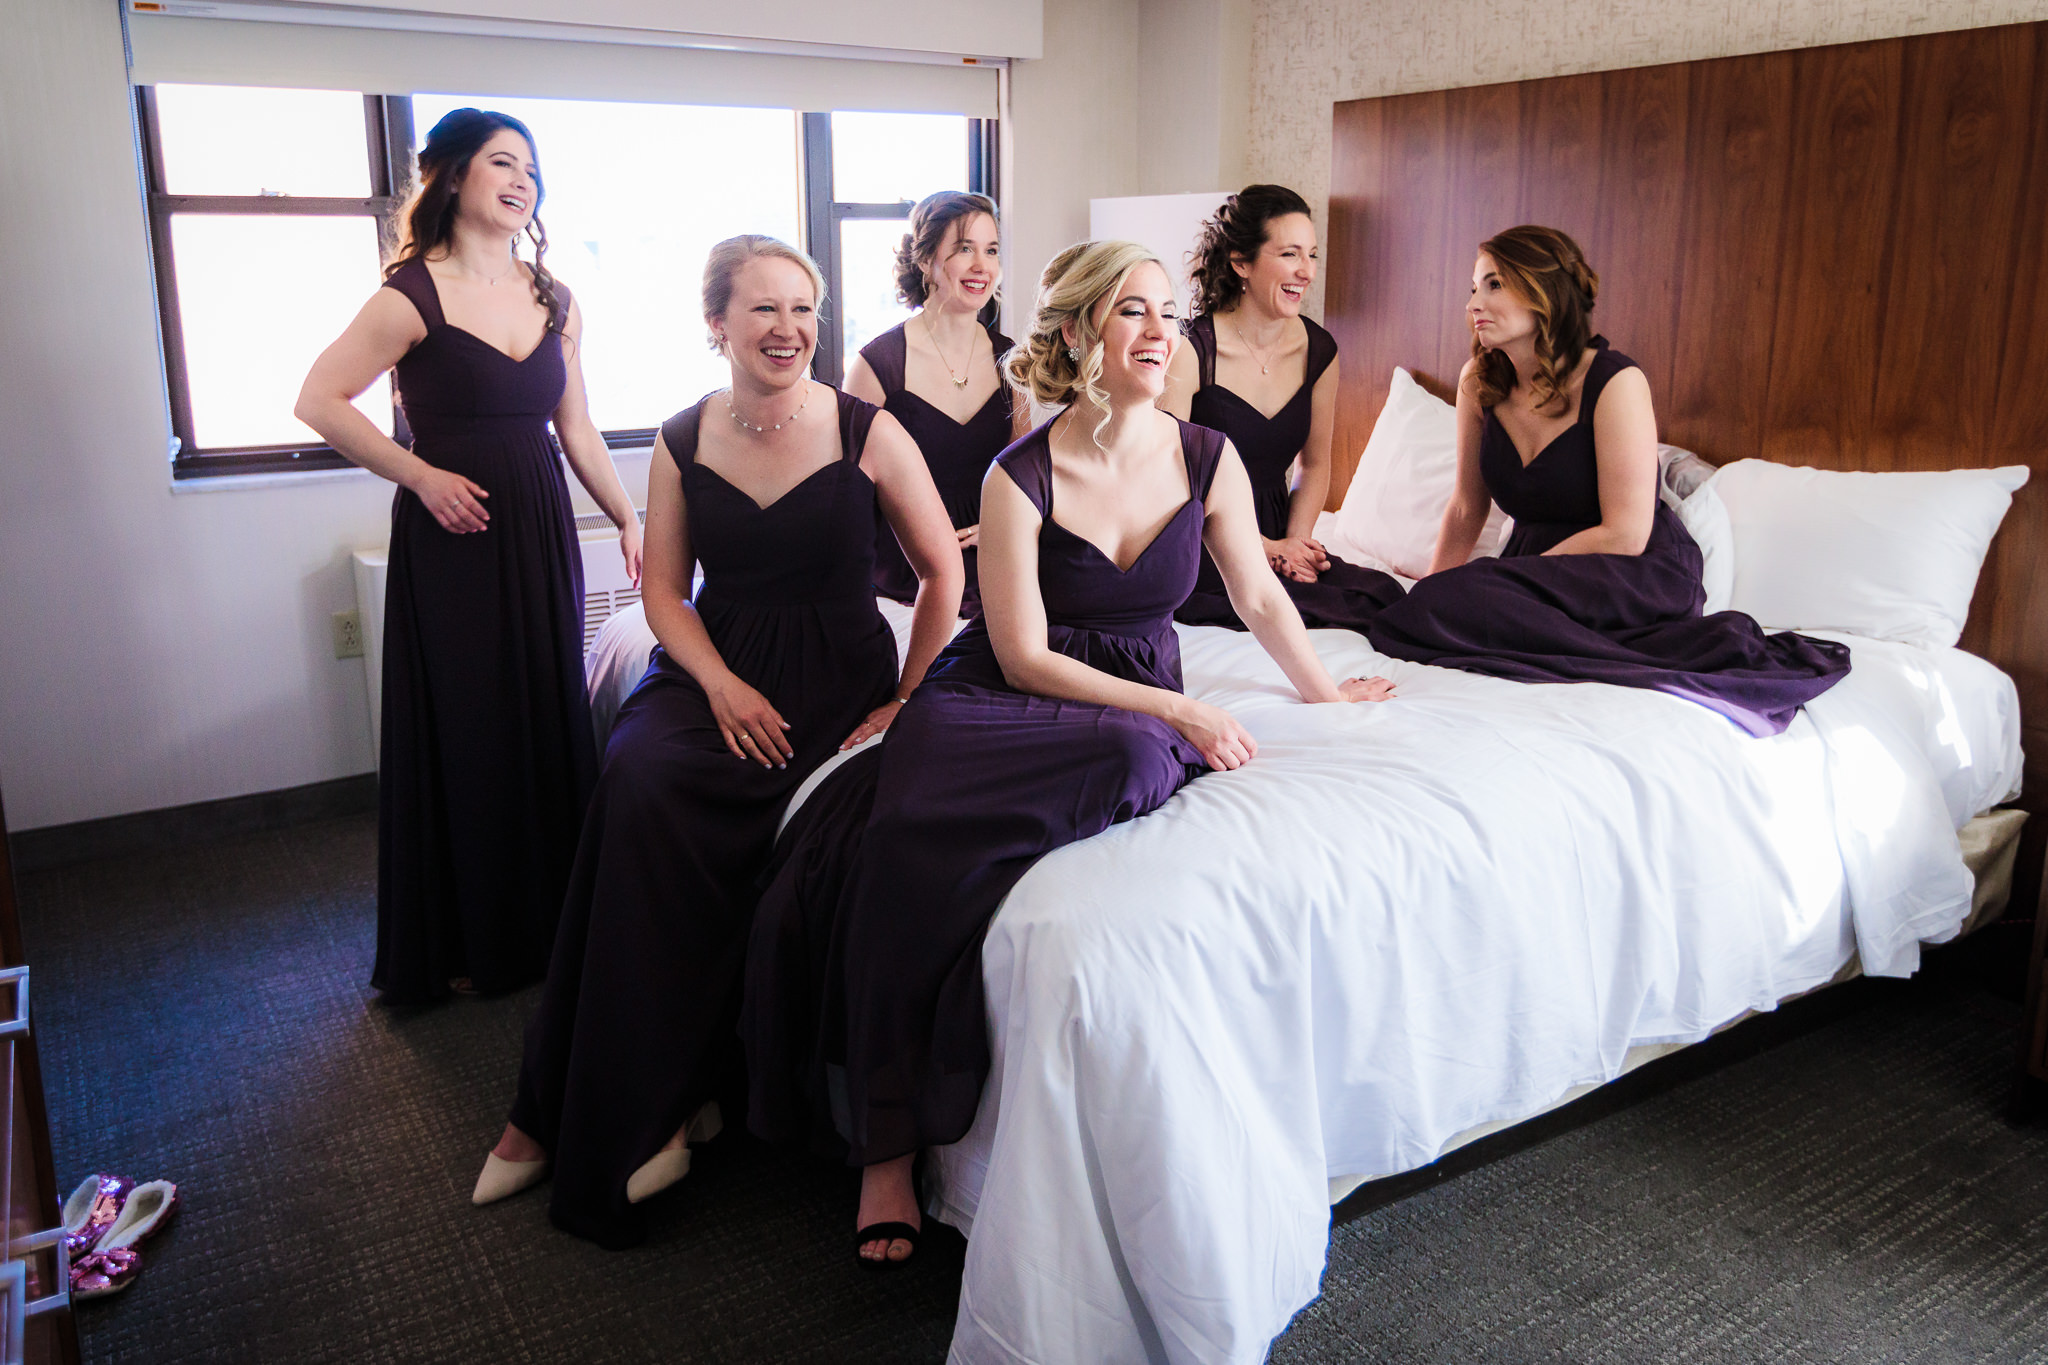 Bridesmaids in purple Bill Levkoff dresses watch as bride gets into her wedding dress